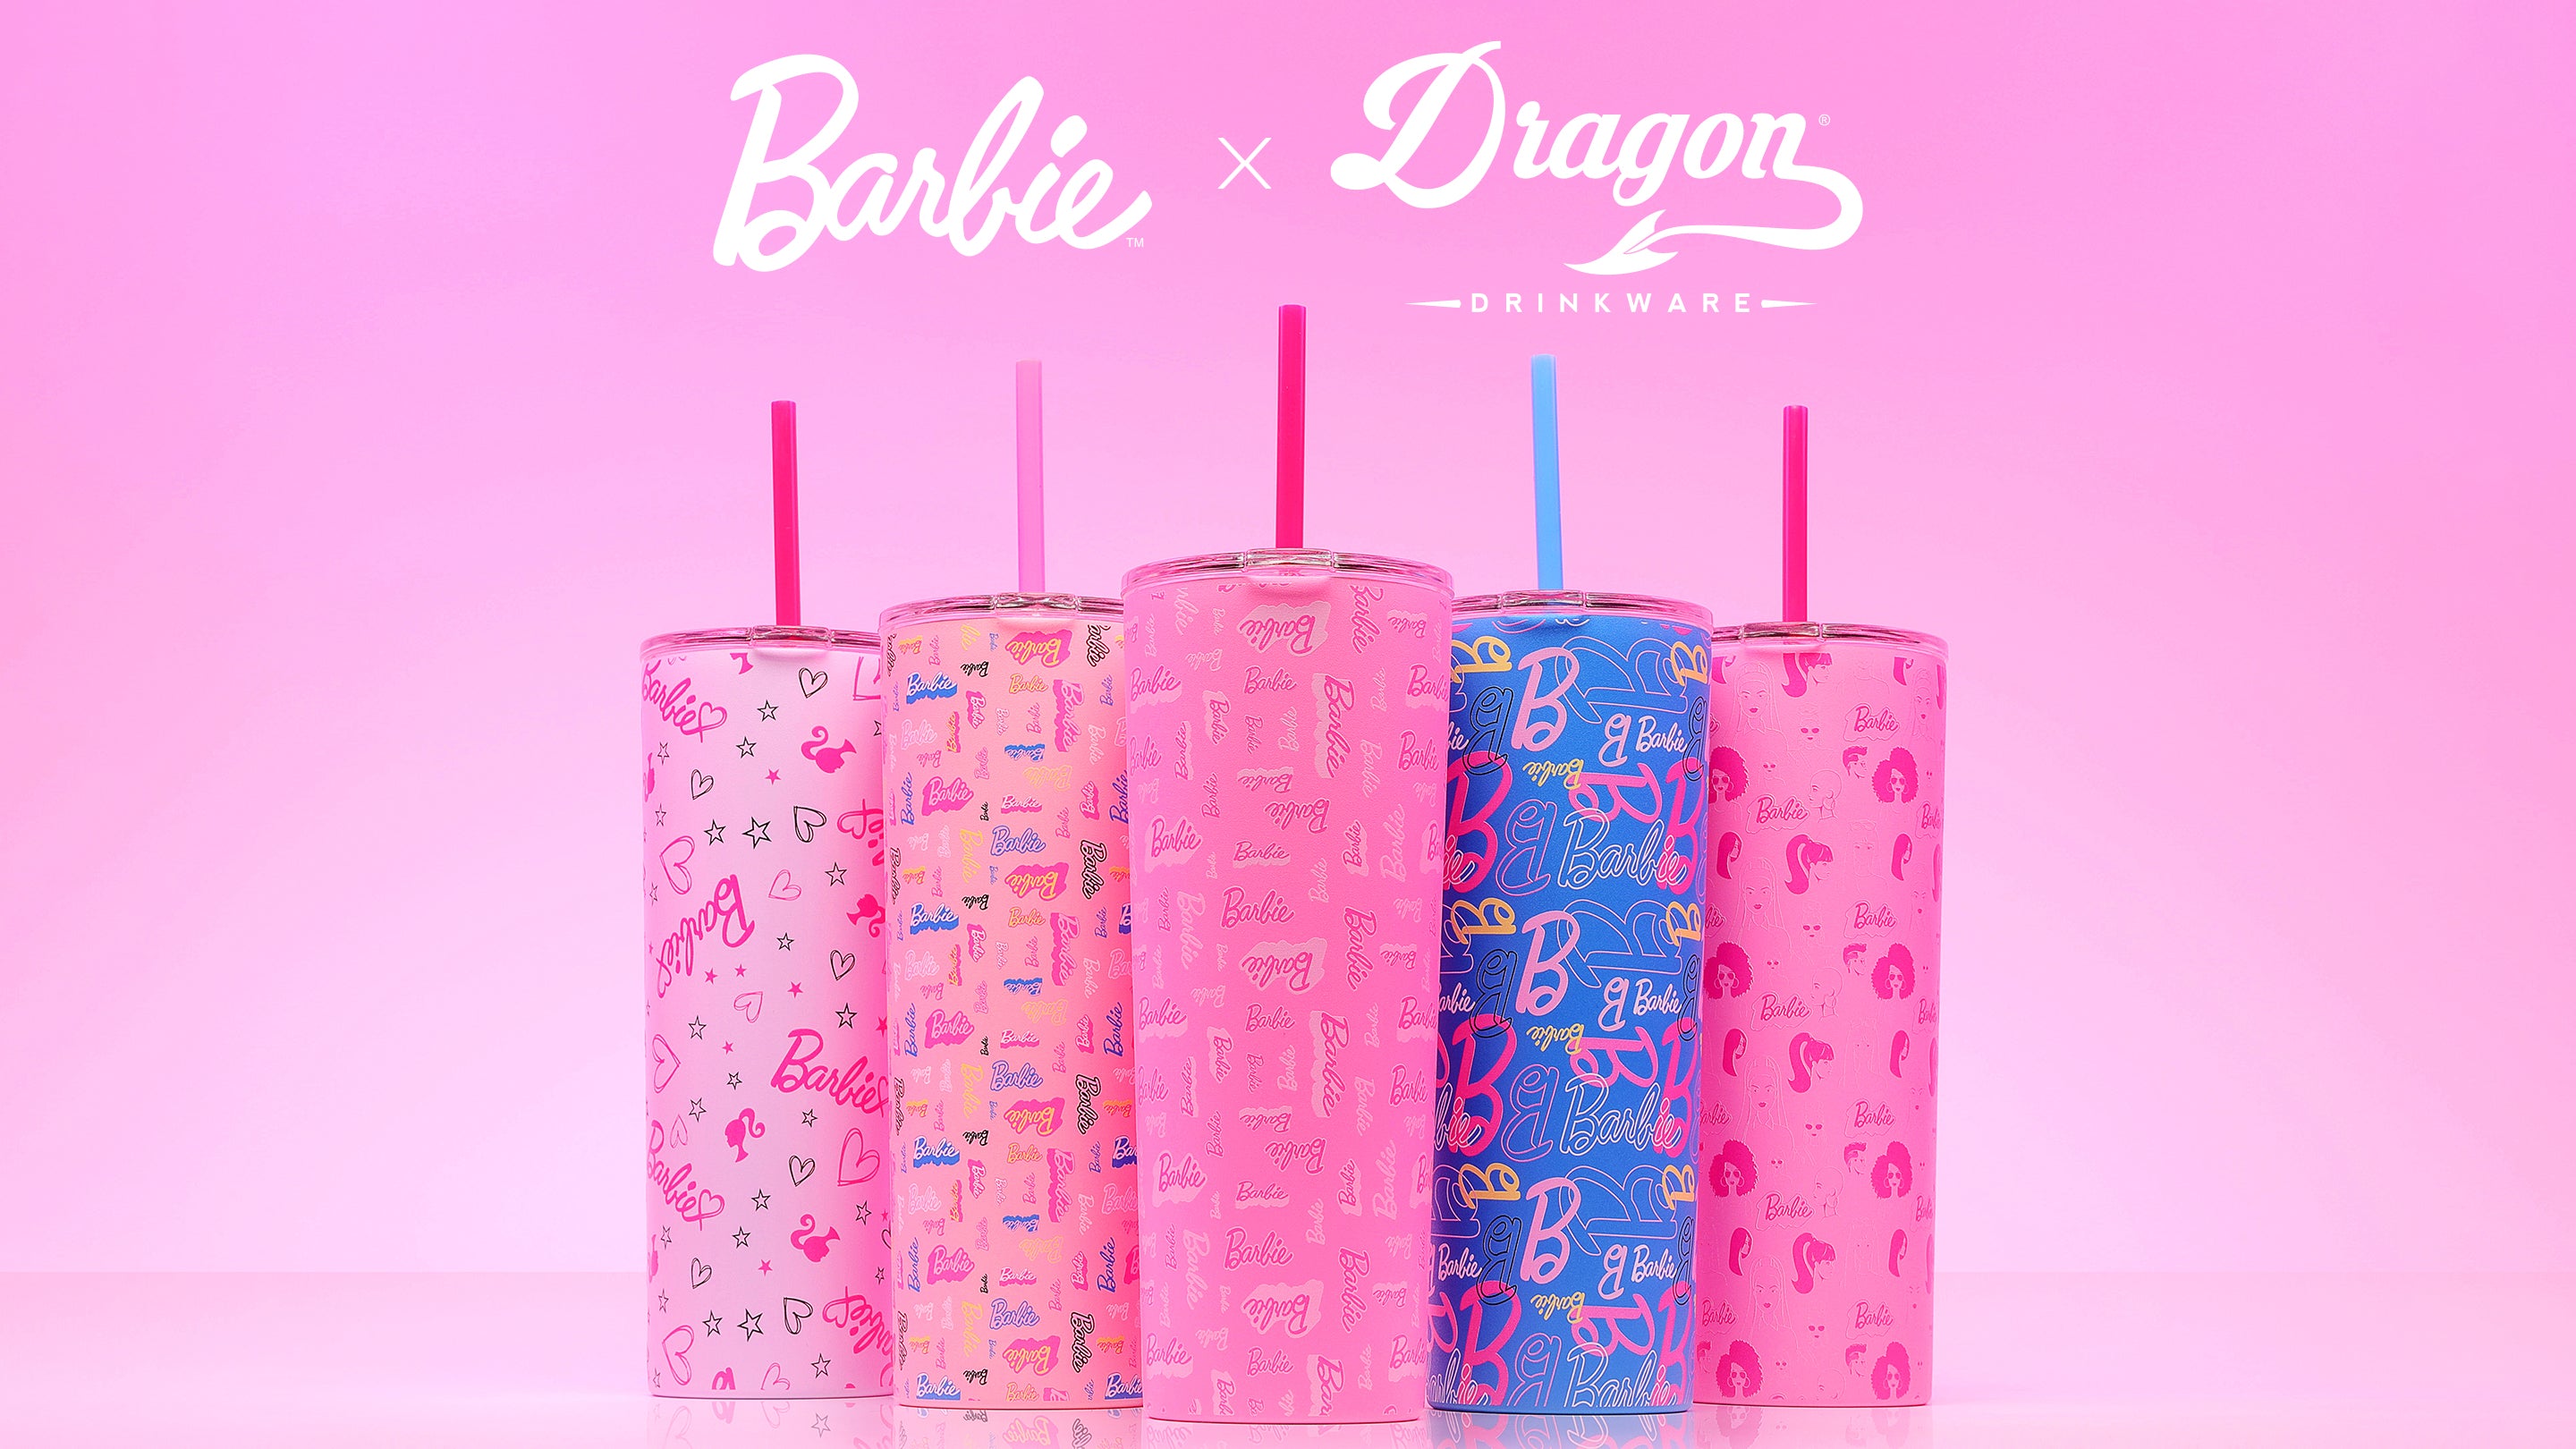 Review of #DRAGON GLASSWARE Barbie™ X Dragon Glassware® Stemless